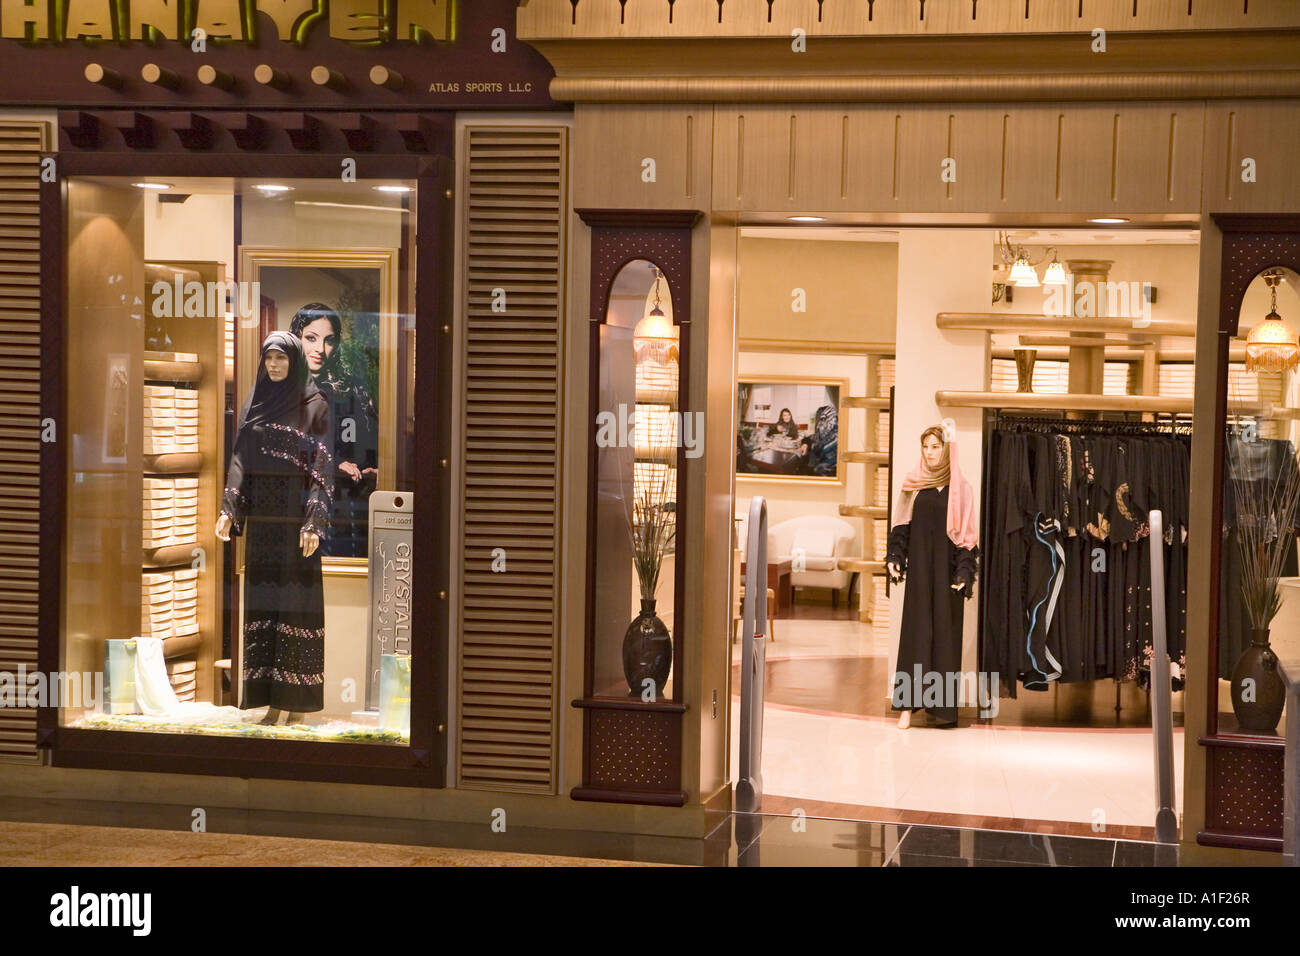 Dubai Mall Of Emirates Shopping Mall Shop For Tradtional Islamic